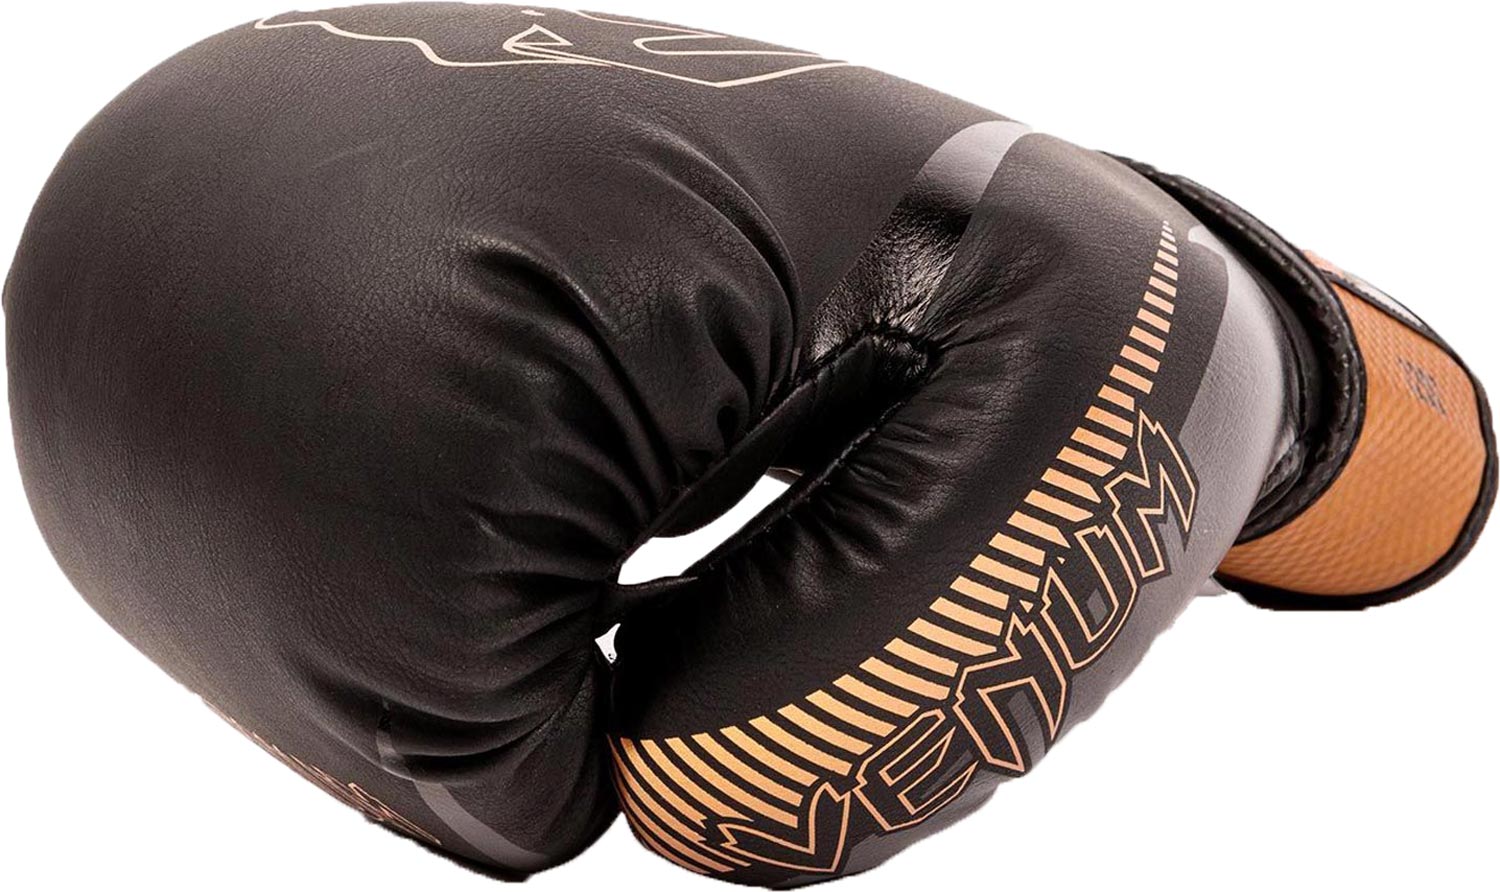 Venum Impact Boxing Gloves 